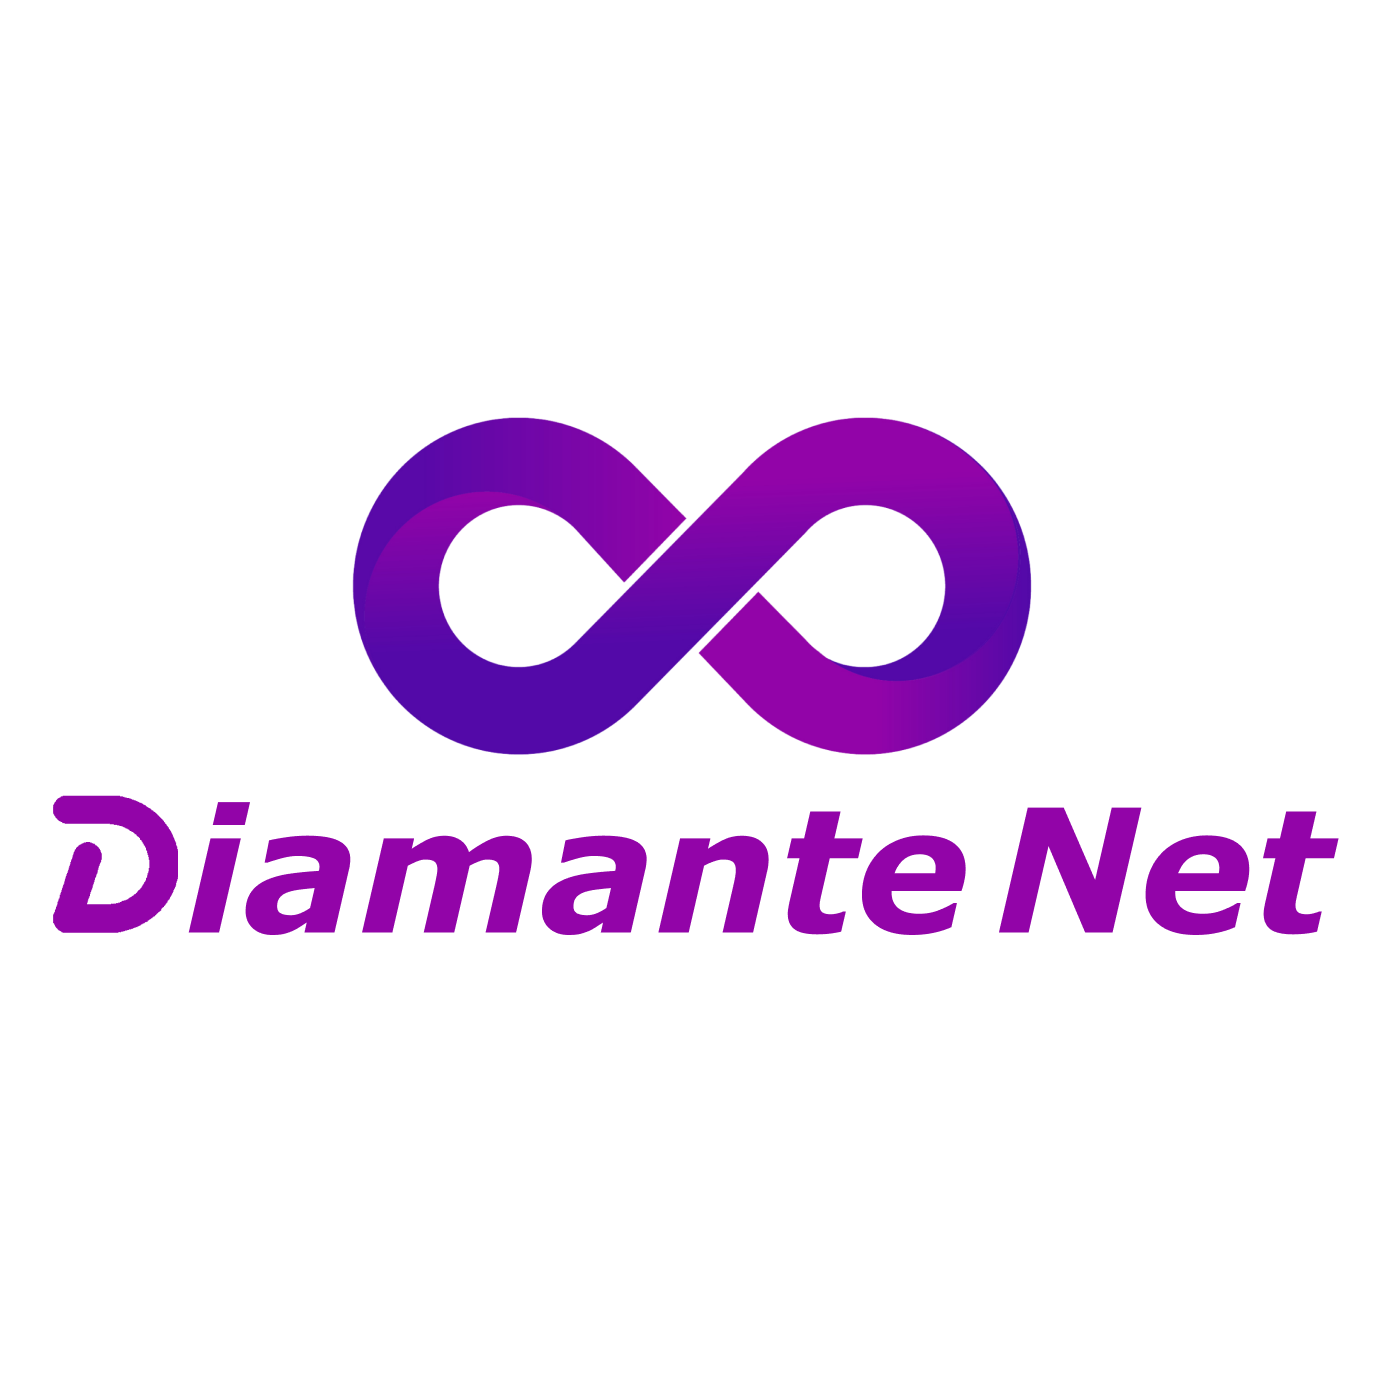 Diamante Net